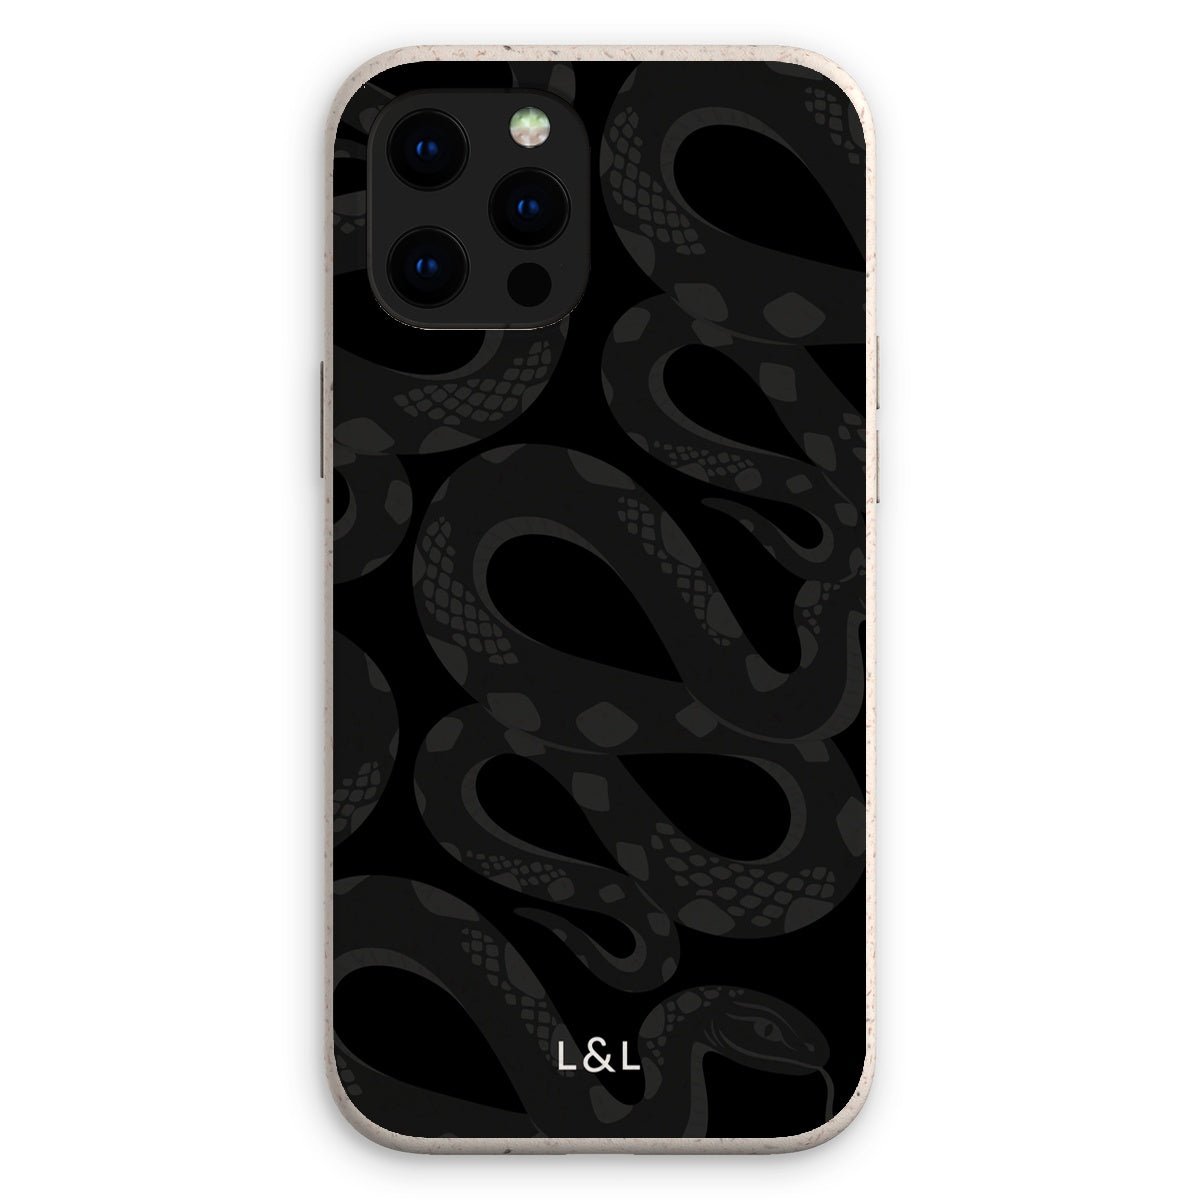 Snakey Eco Phone Case - Loam & Lore